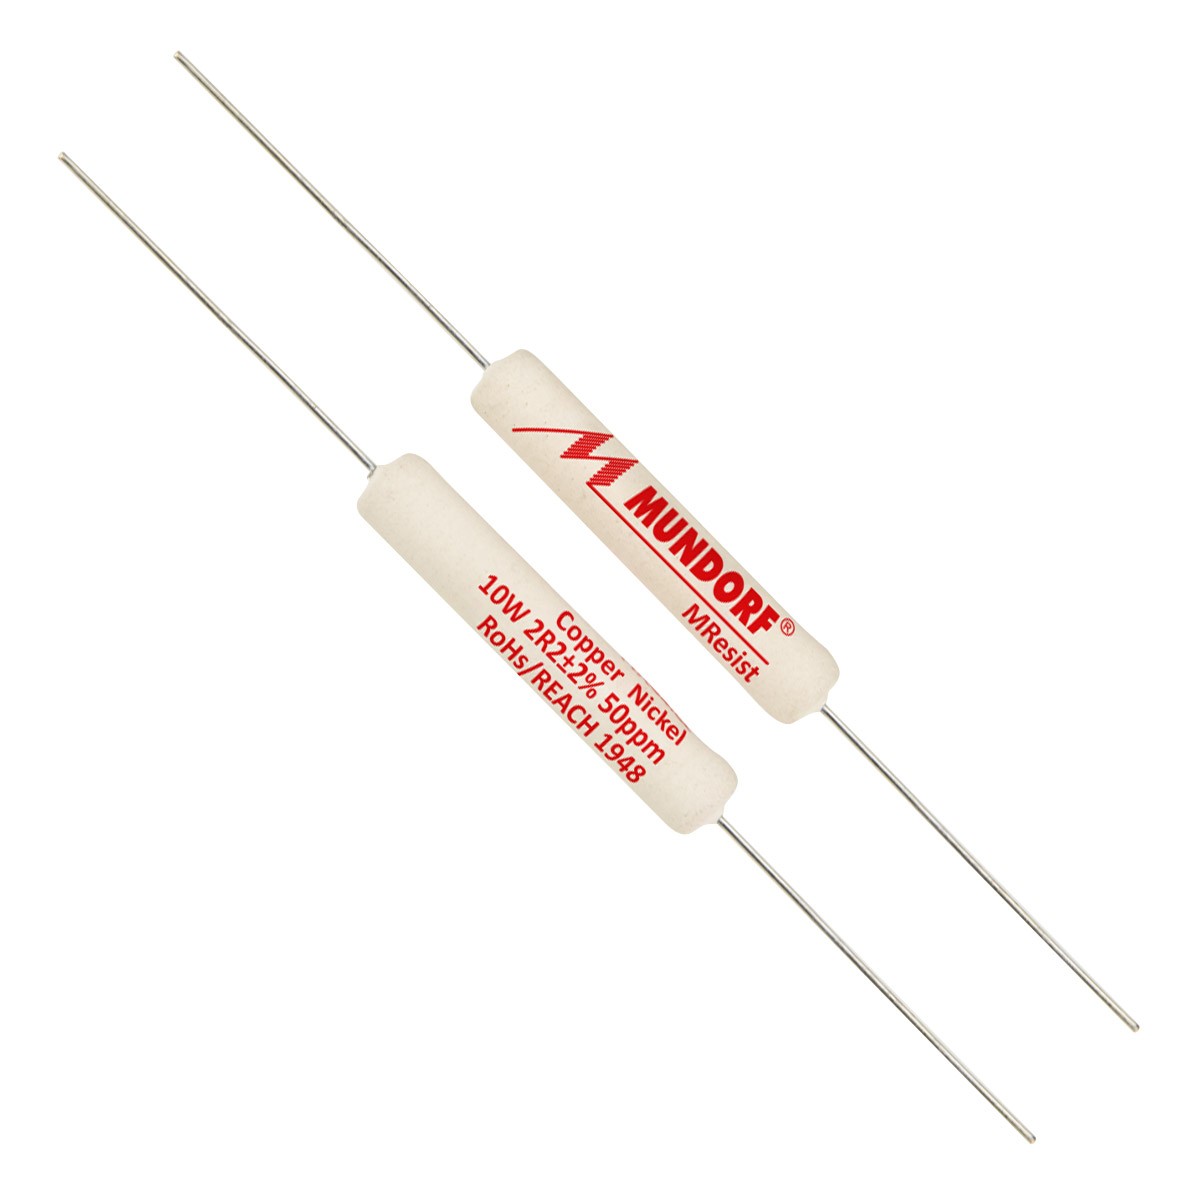 MUNDORF MRESIST CLASSIC Resistor 10W 4.7 Ohm